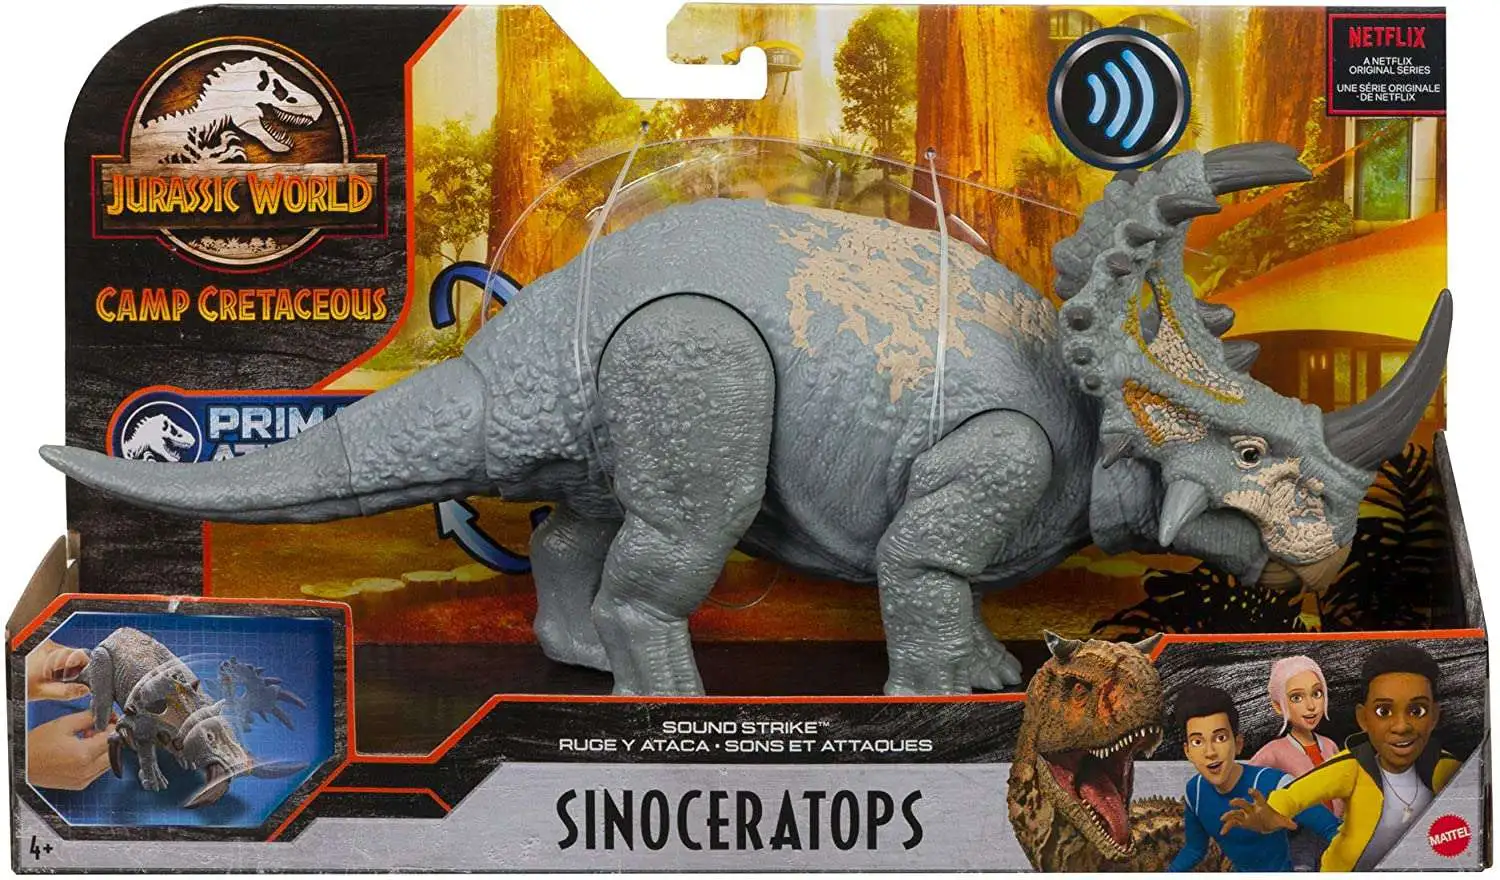 Jurassic World Camp Cretaceous Sinoceratops Action Figure [Sound Strike, Damaged Package]